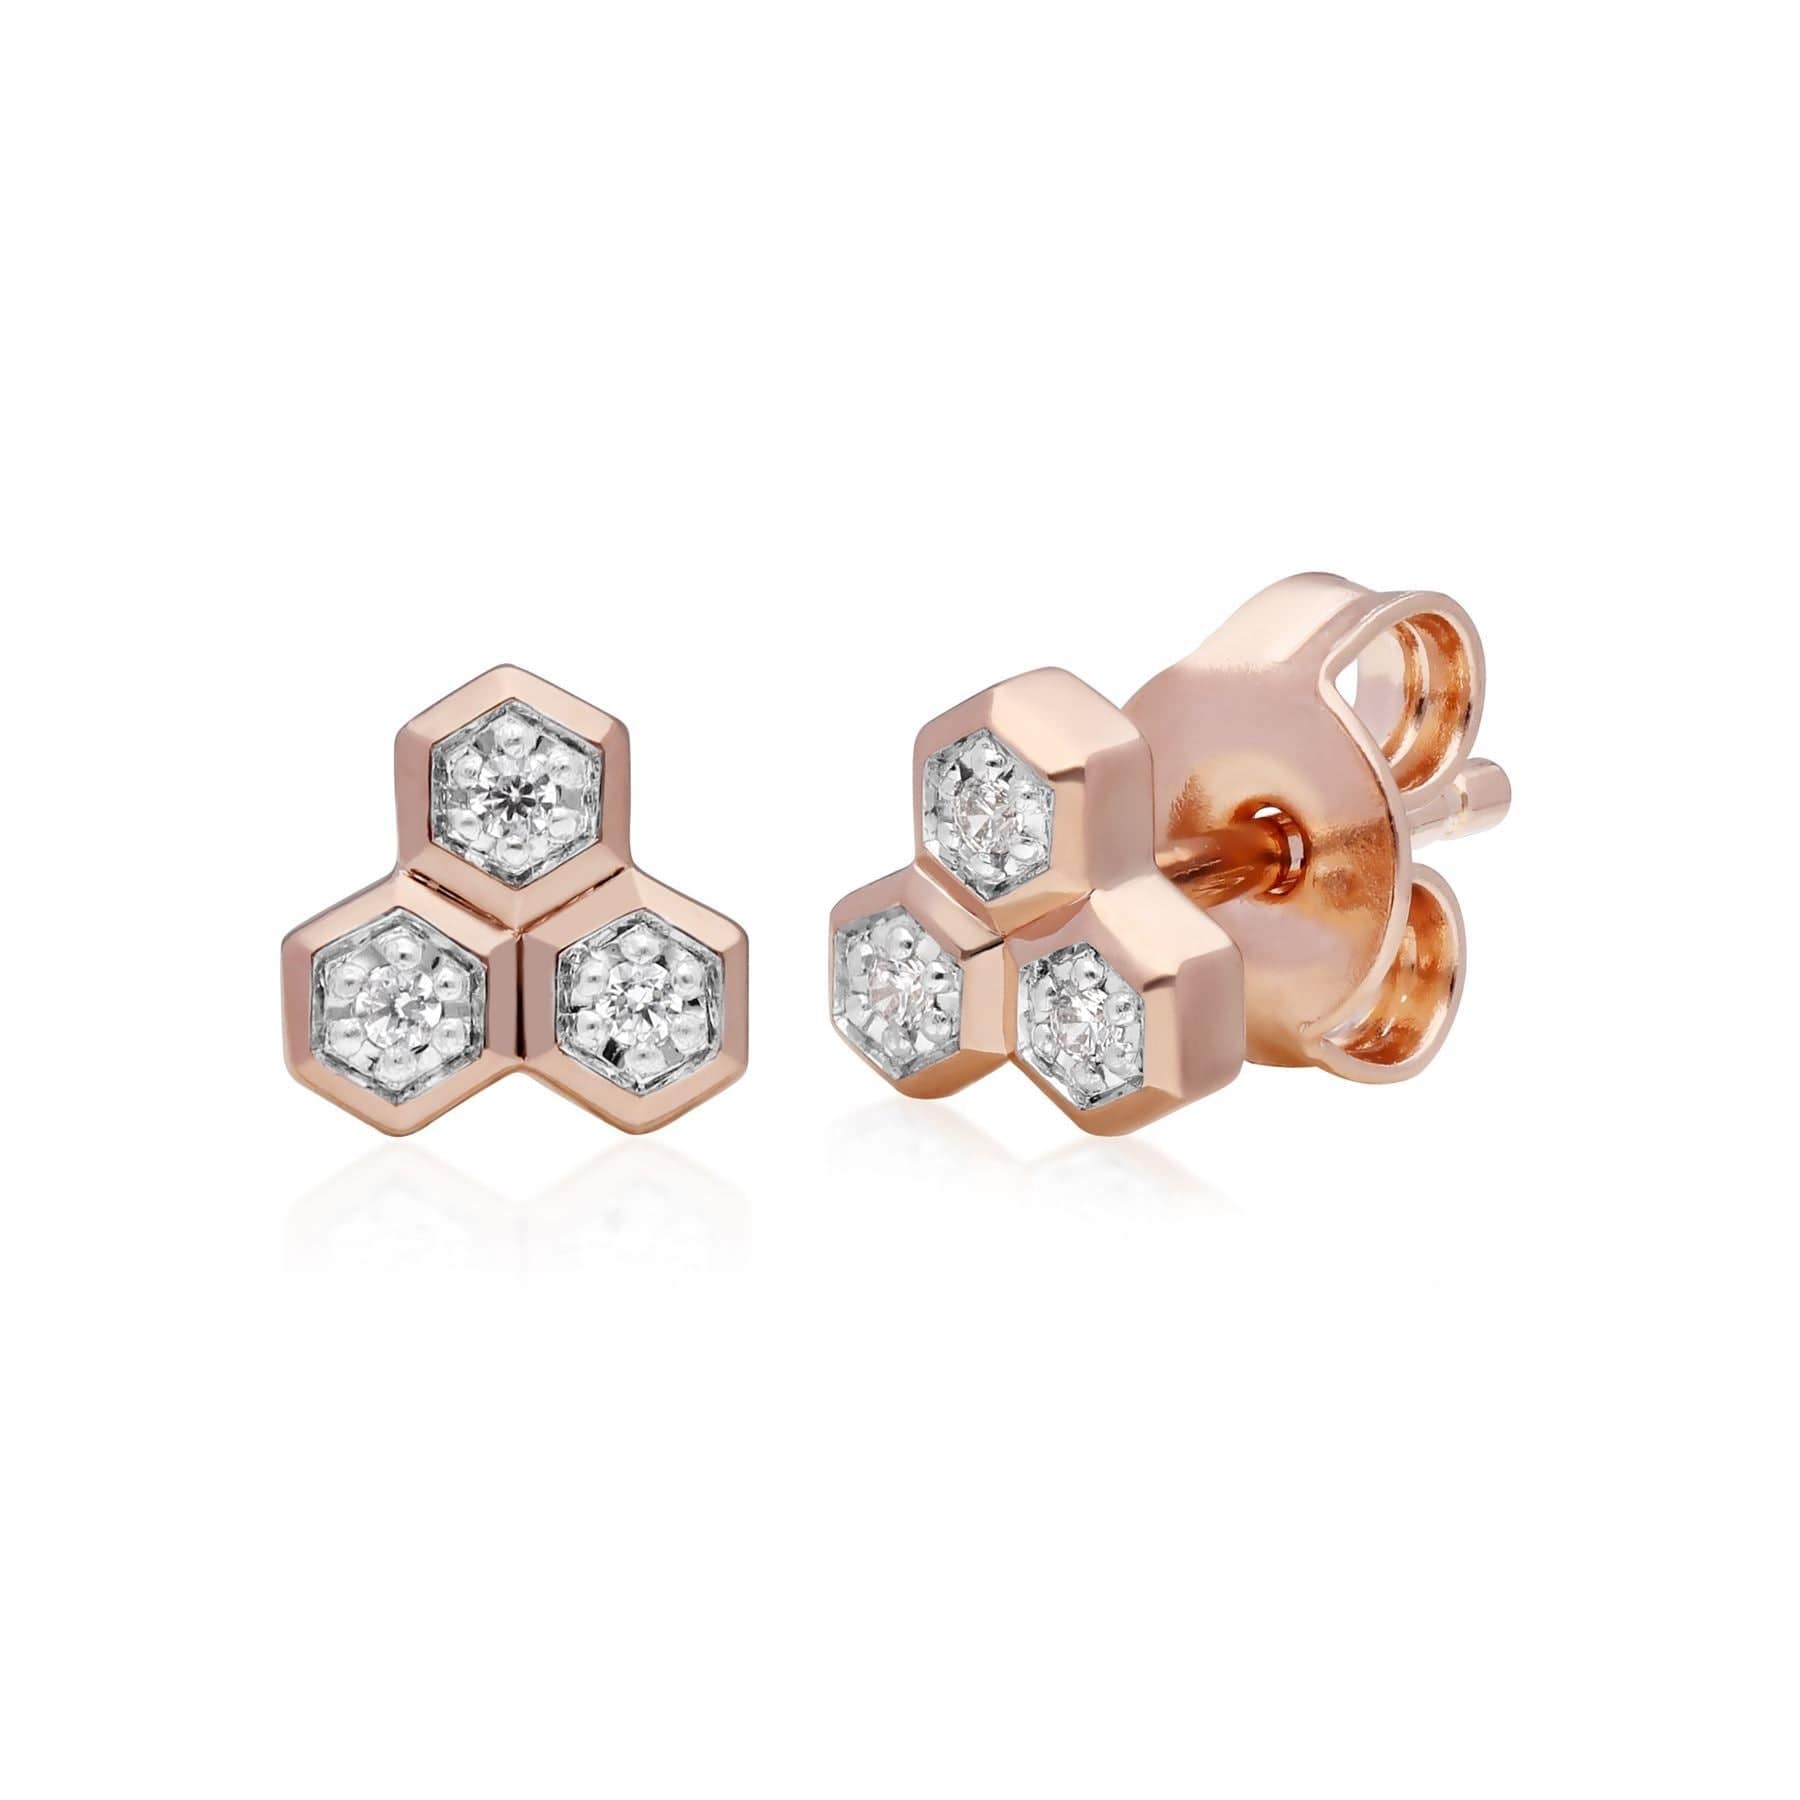 191E0394029-191R0901029 Diamond Trilogy Ring & Stud Earring Set in 9ct Rose Gold 1